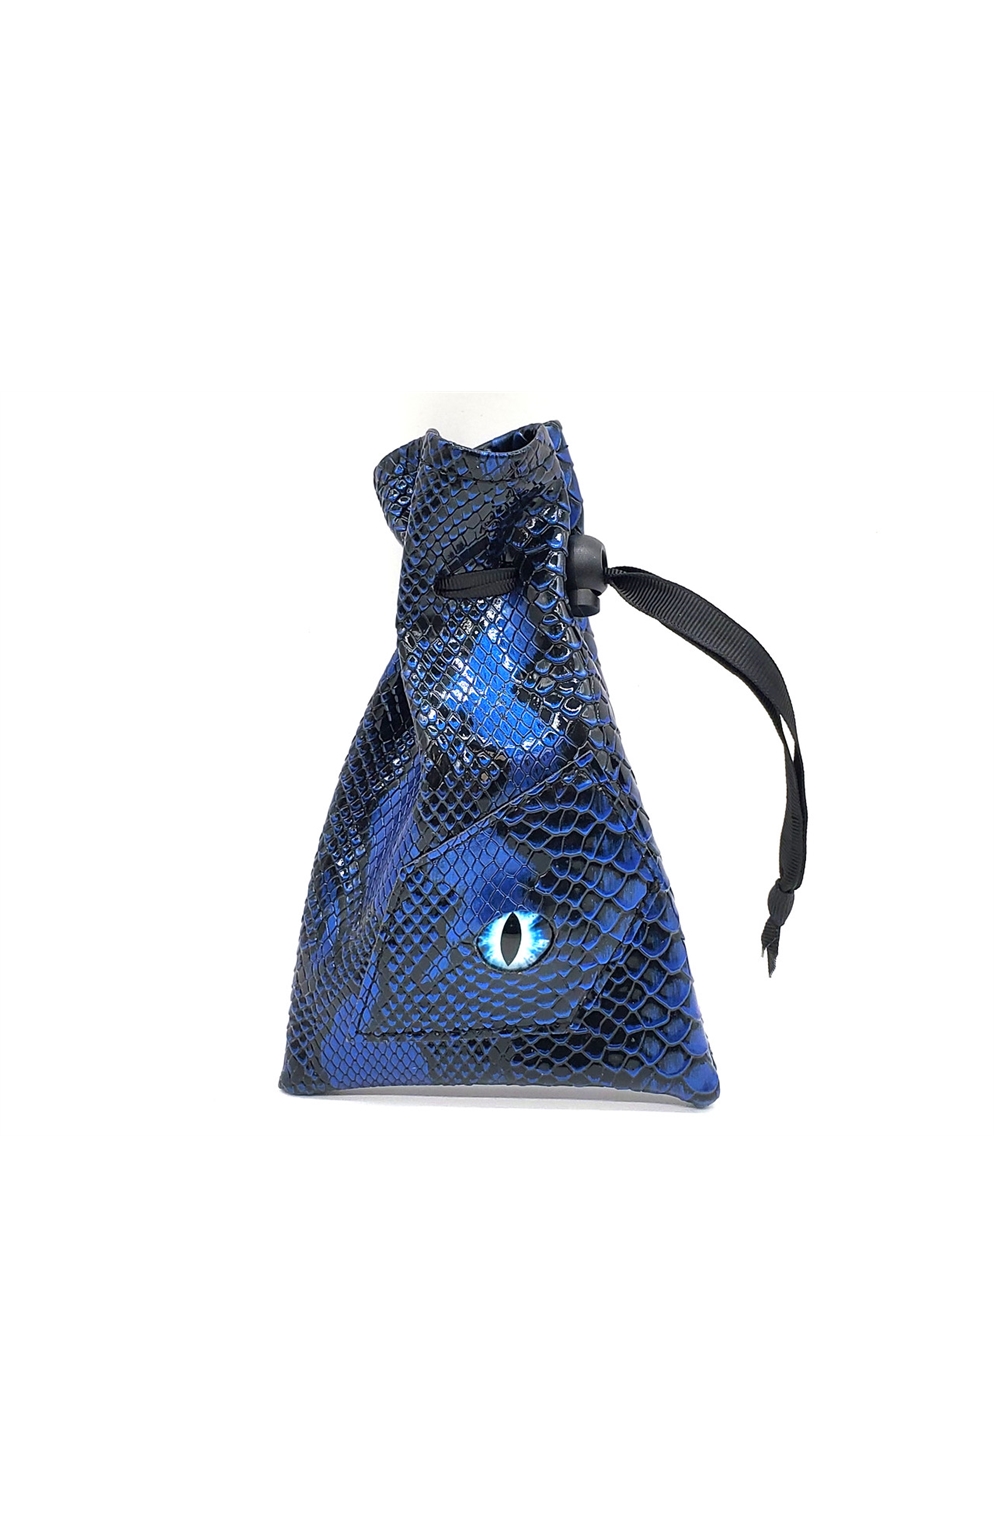 Dragon Eye Rpg Dnd Dice Bag: Spectral Dragon: Blue & Black